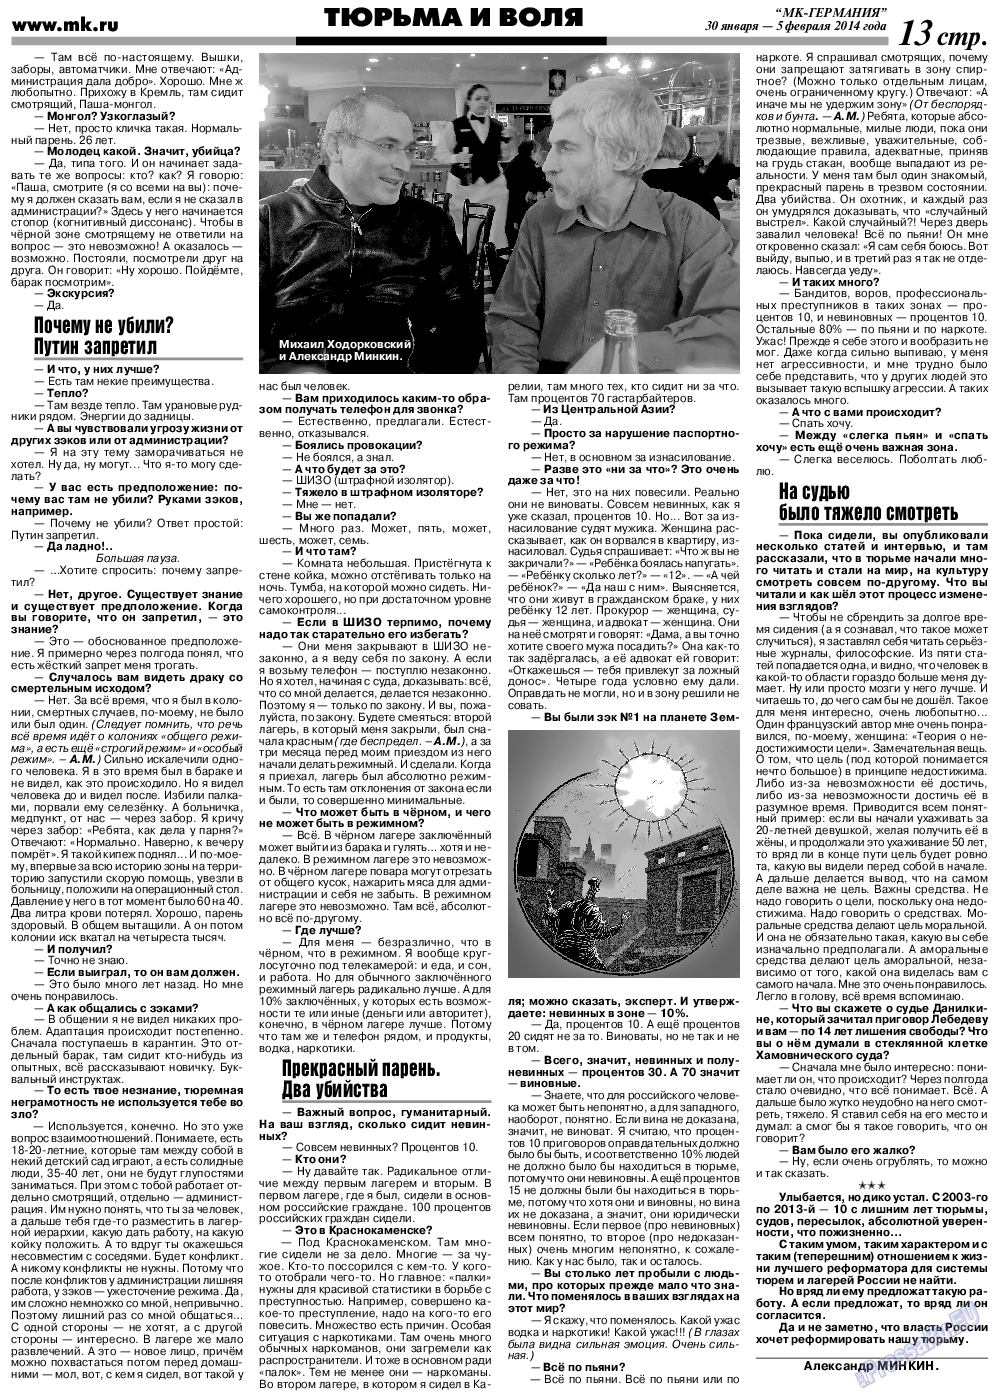 МК-Германия, газета. 2014 №5 стр.13